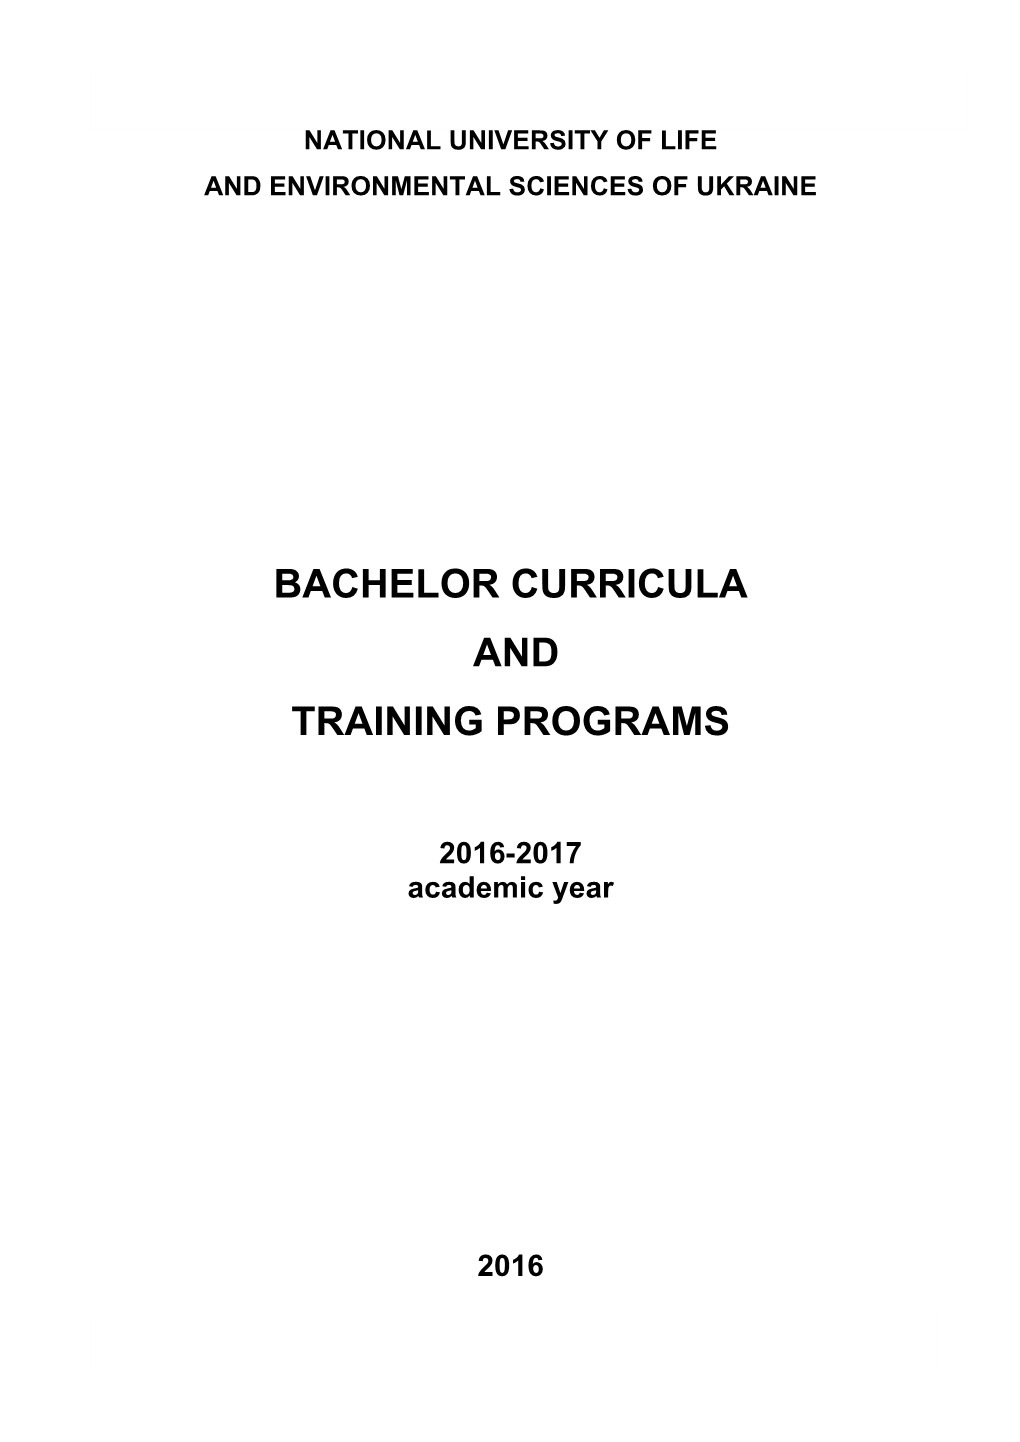 Bachalor Curricula and Training Programs